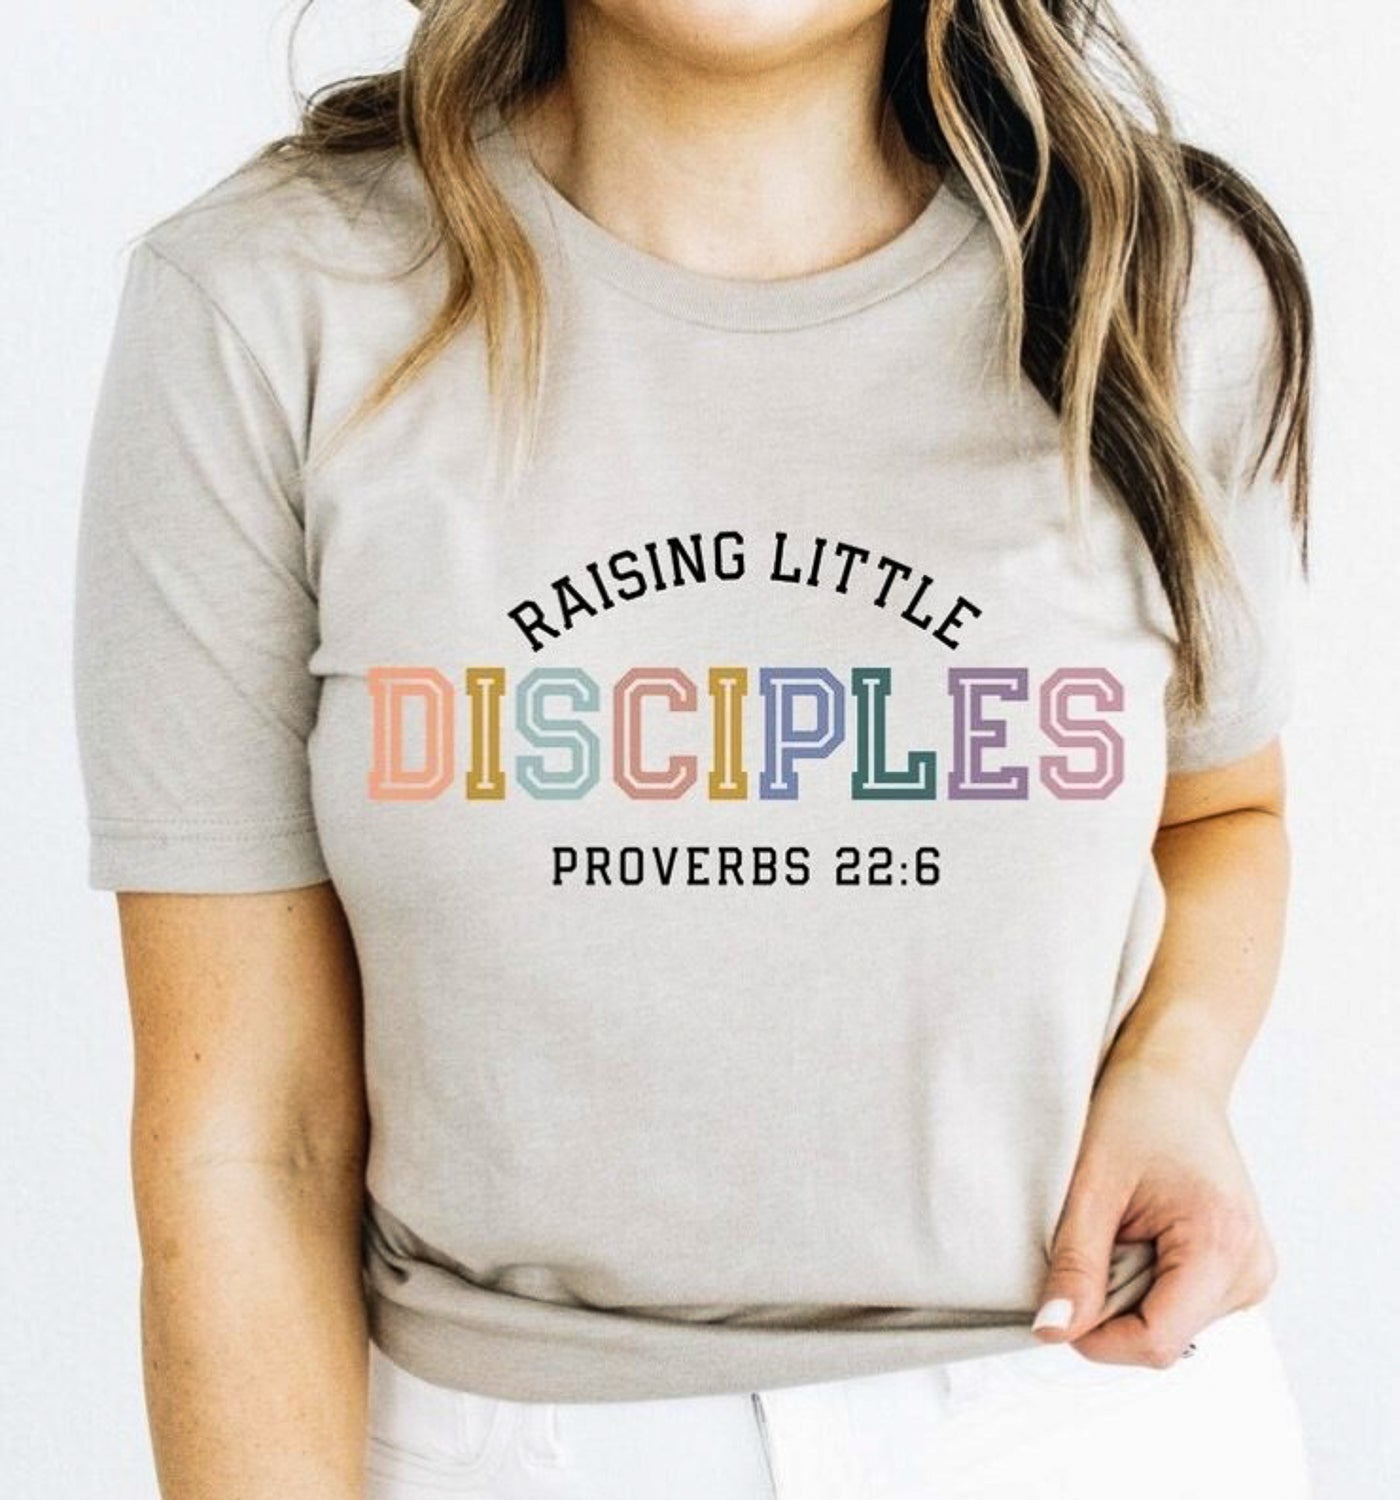 Raising Little Disciples Proverbs 22:6 Tee